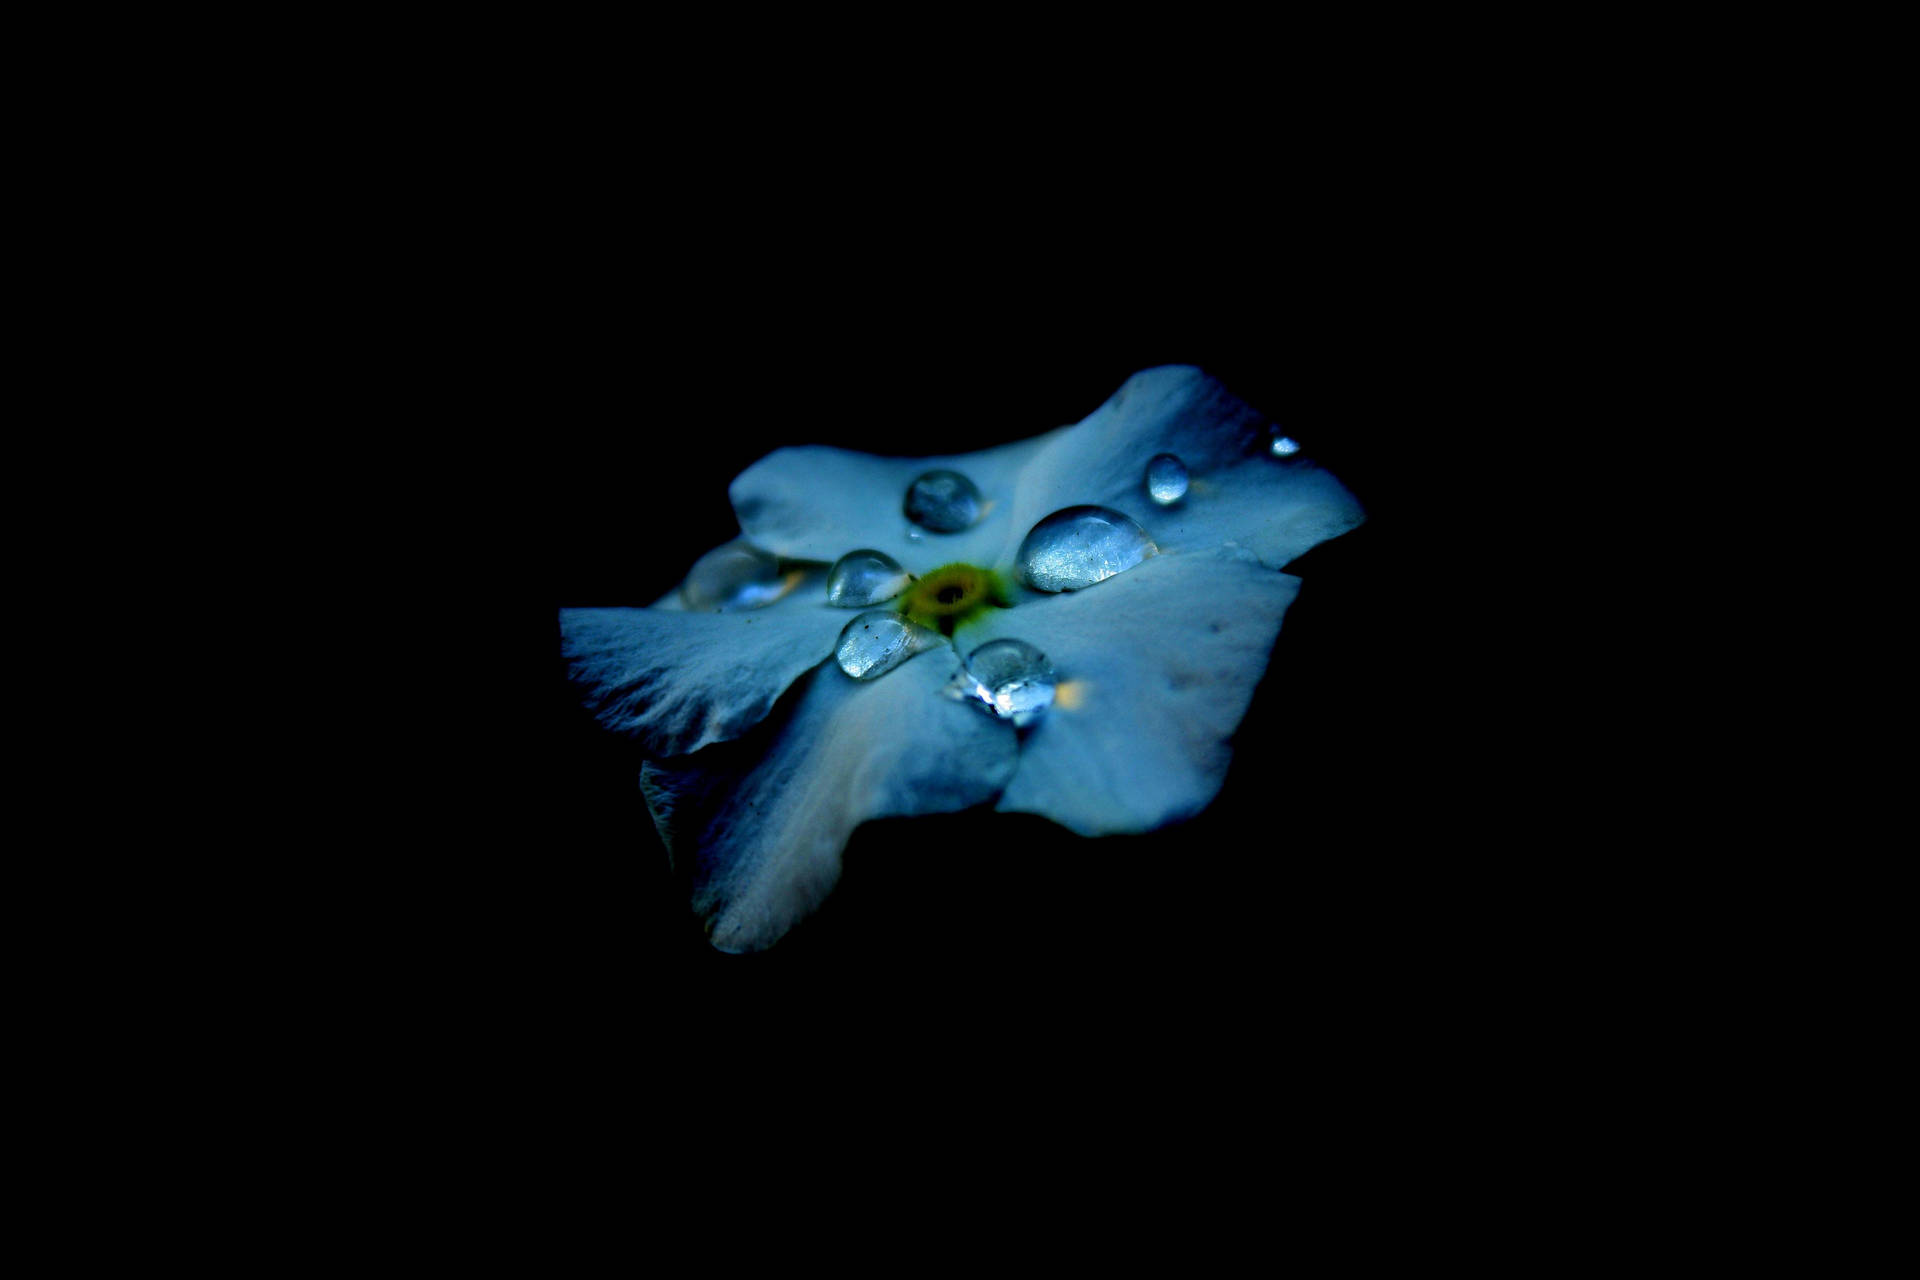 Vibrant Blue Flower Under Raindrops Displayed On Best Oled Screen Wallpaper